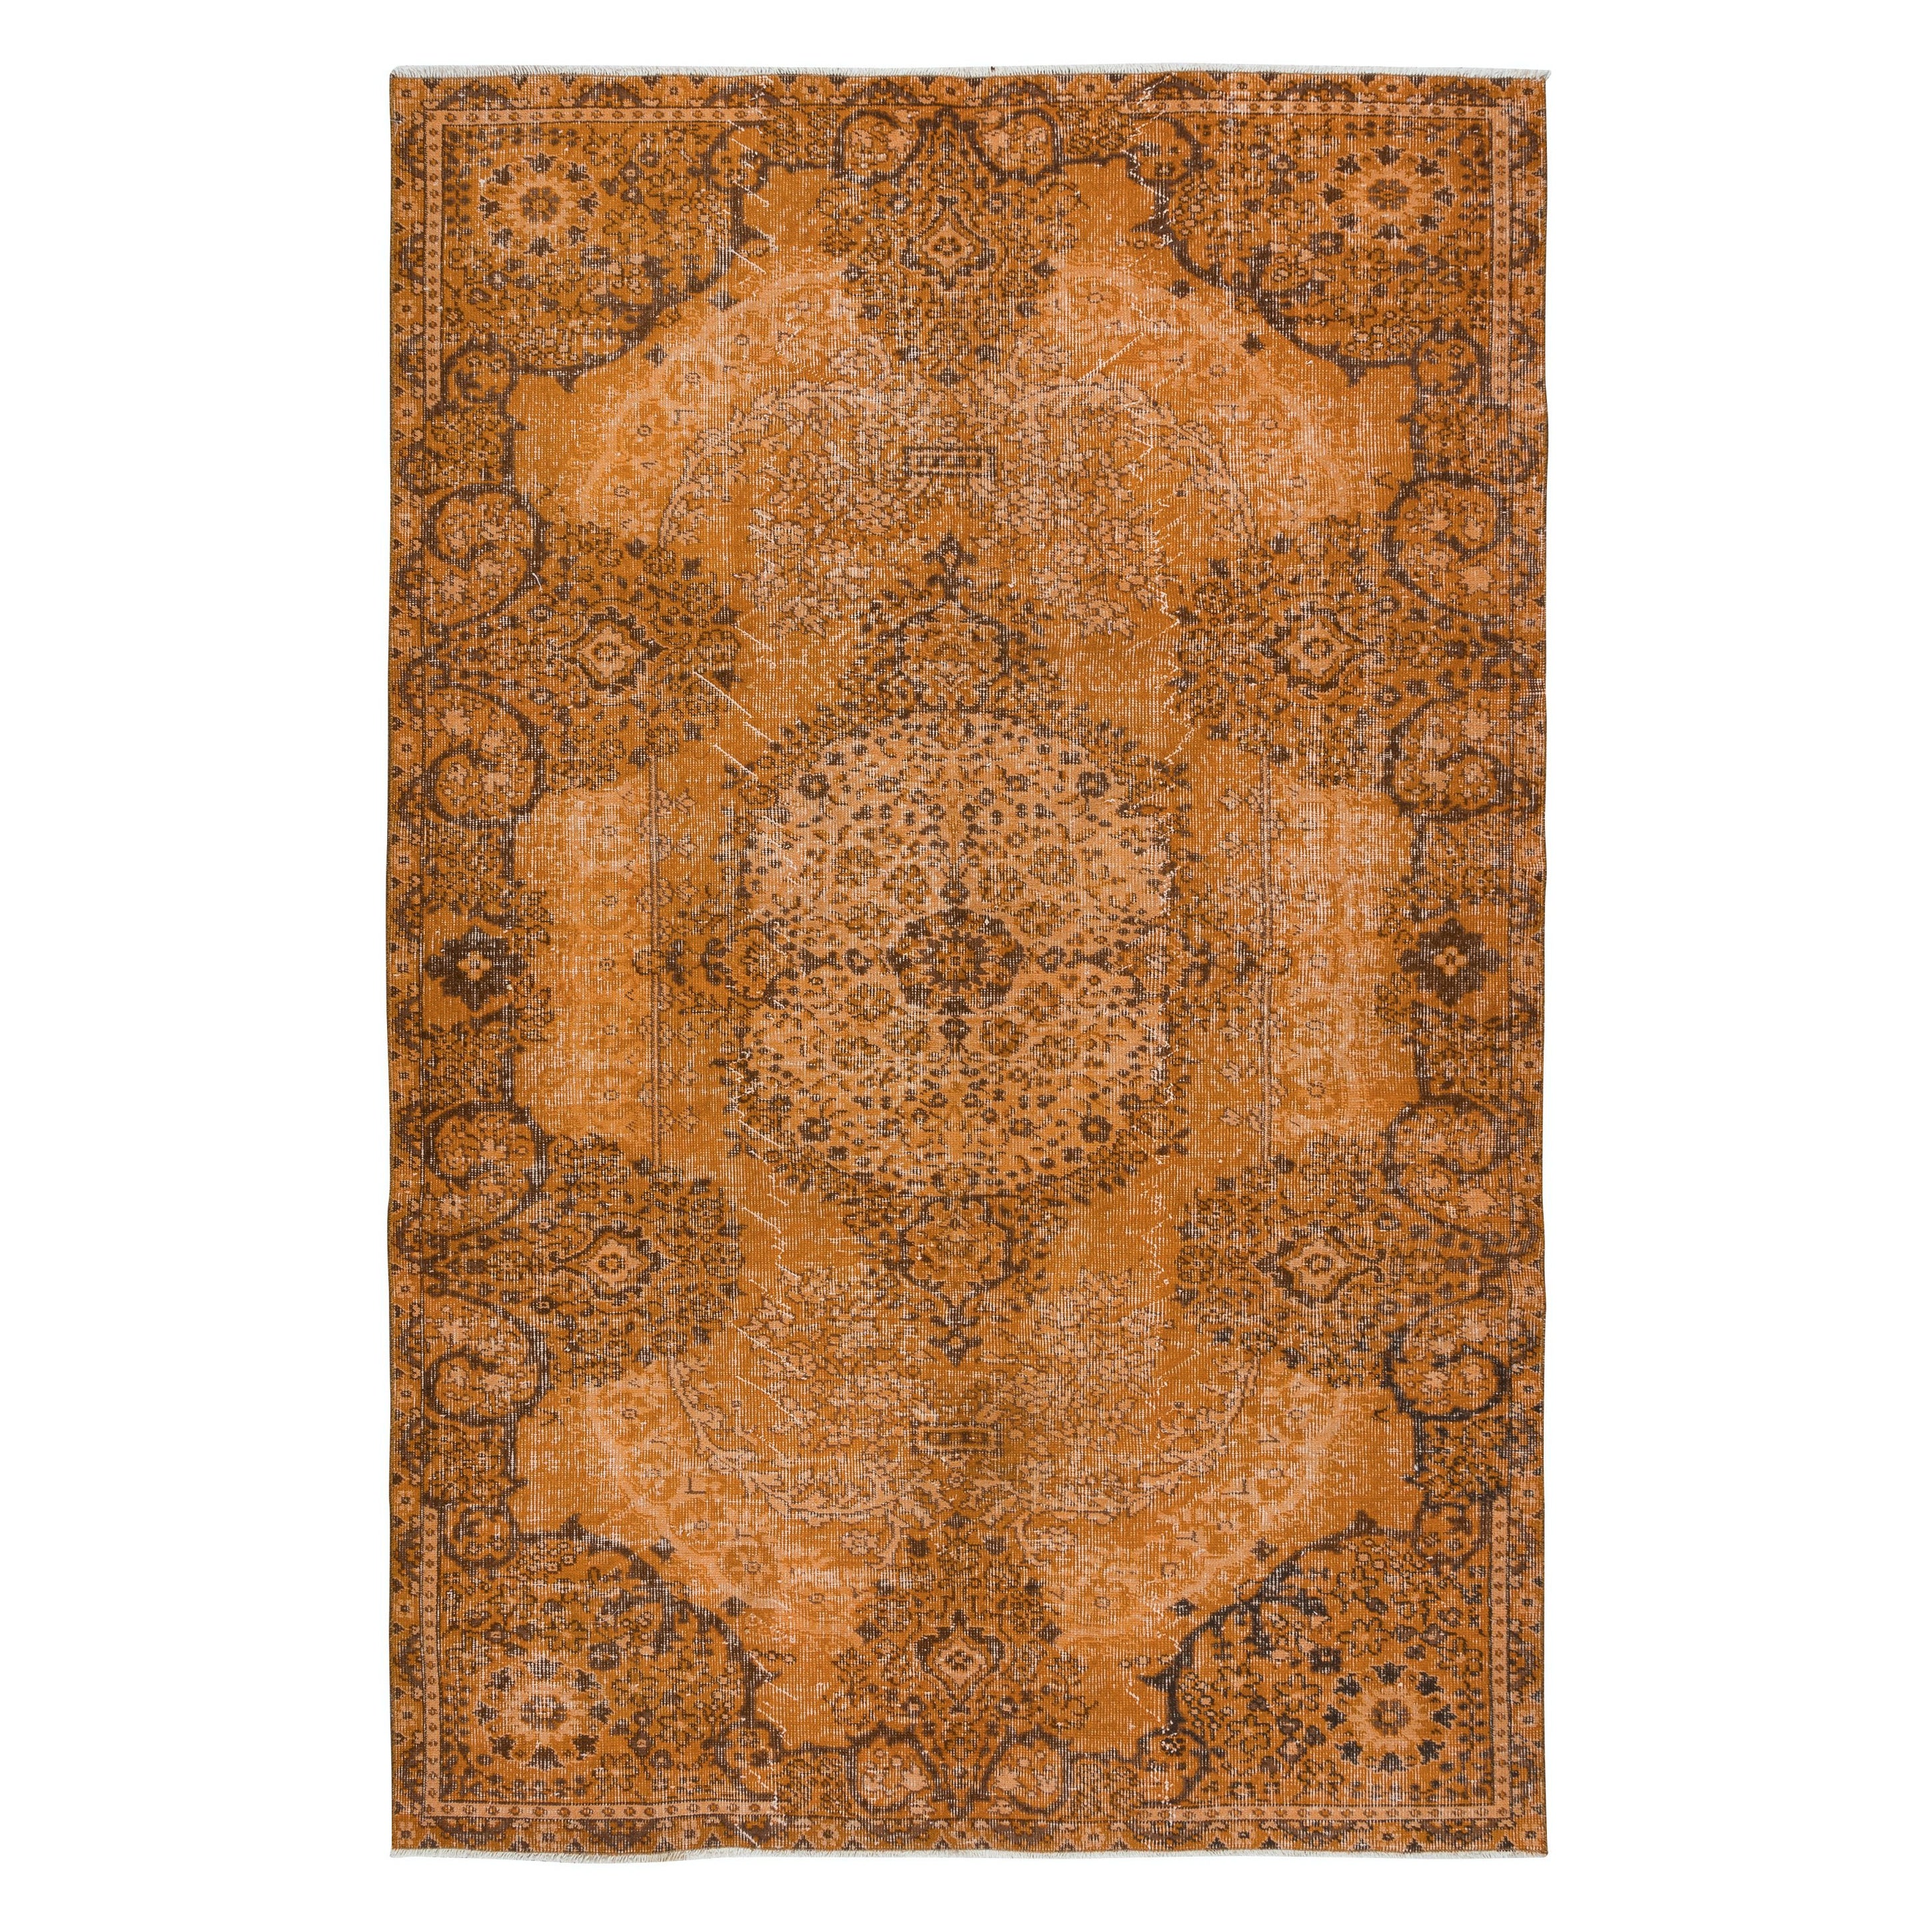 5.6x8.4 Ft Dreamy Orange Rug, Handknotted in Turkey, Modern Living Room Carpet For Sale